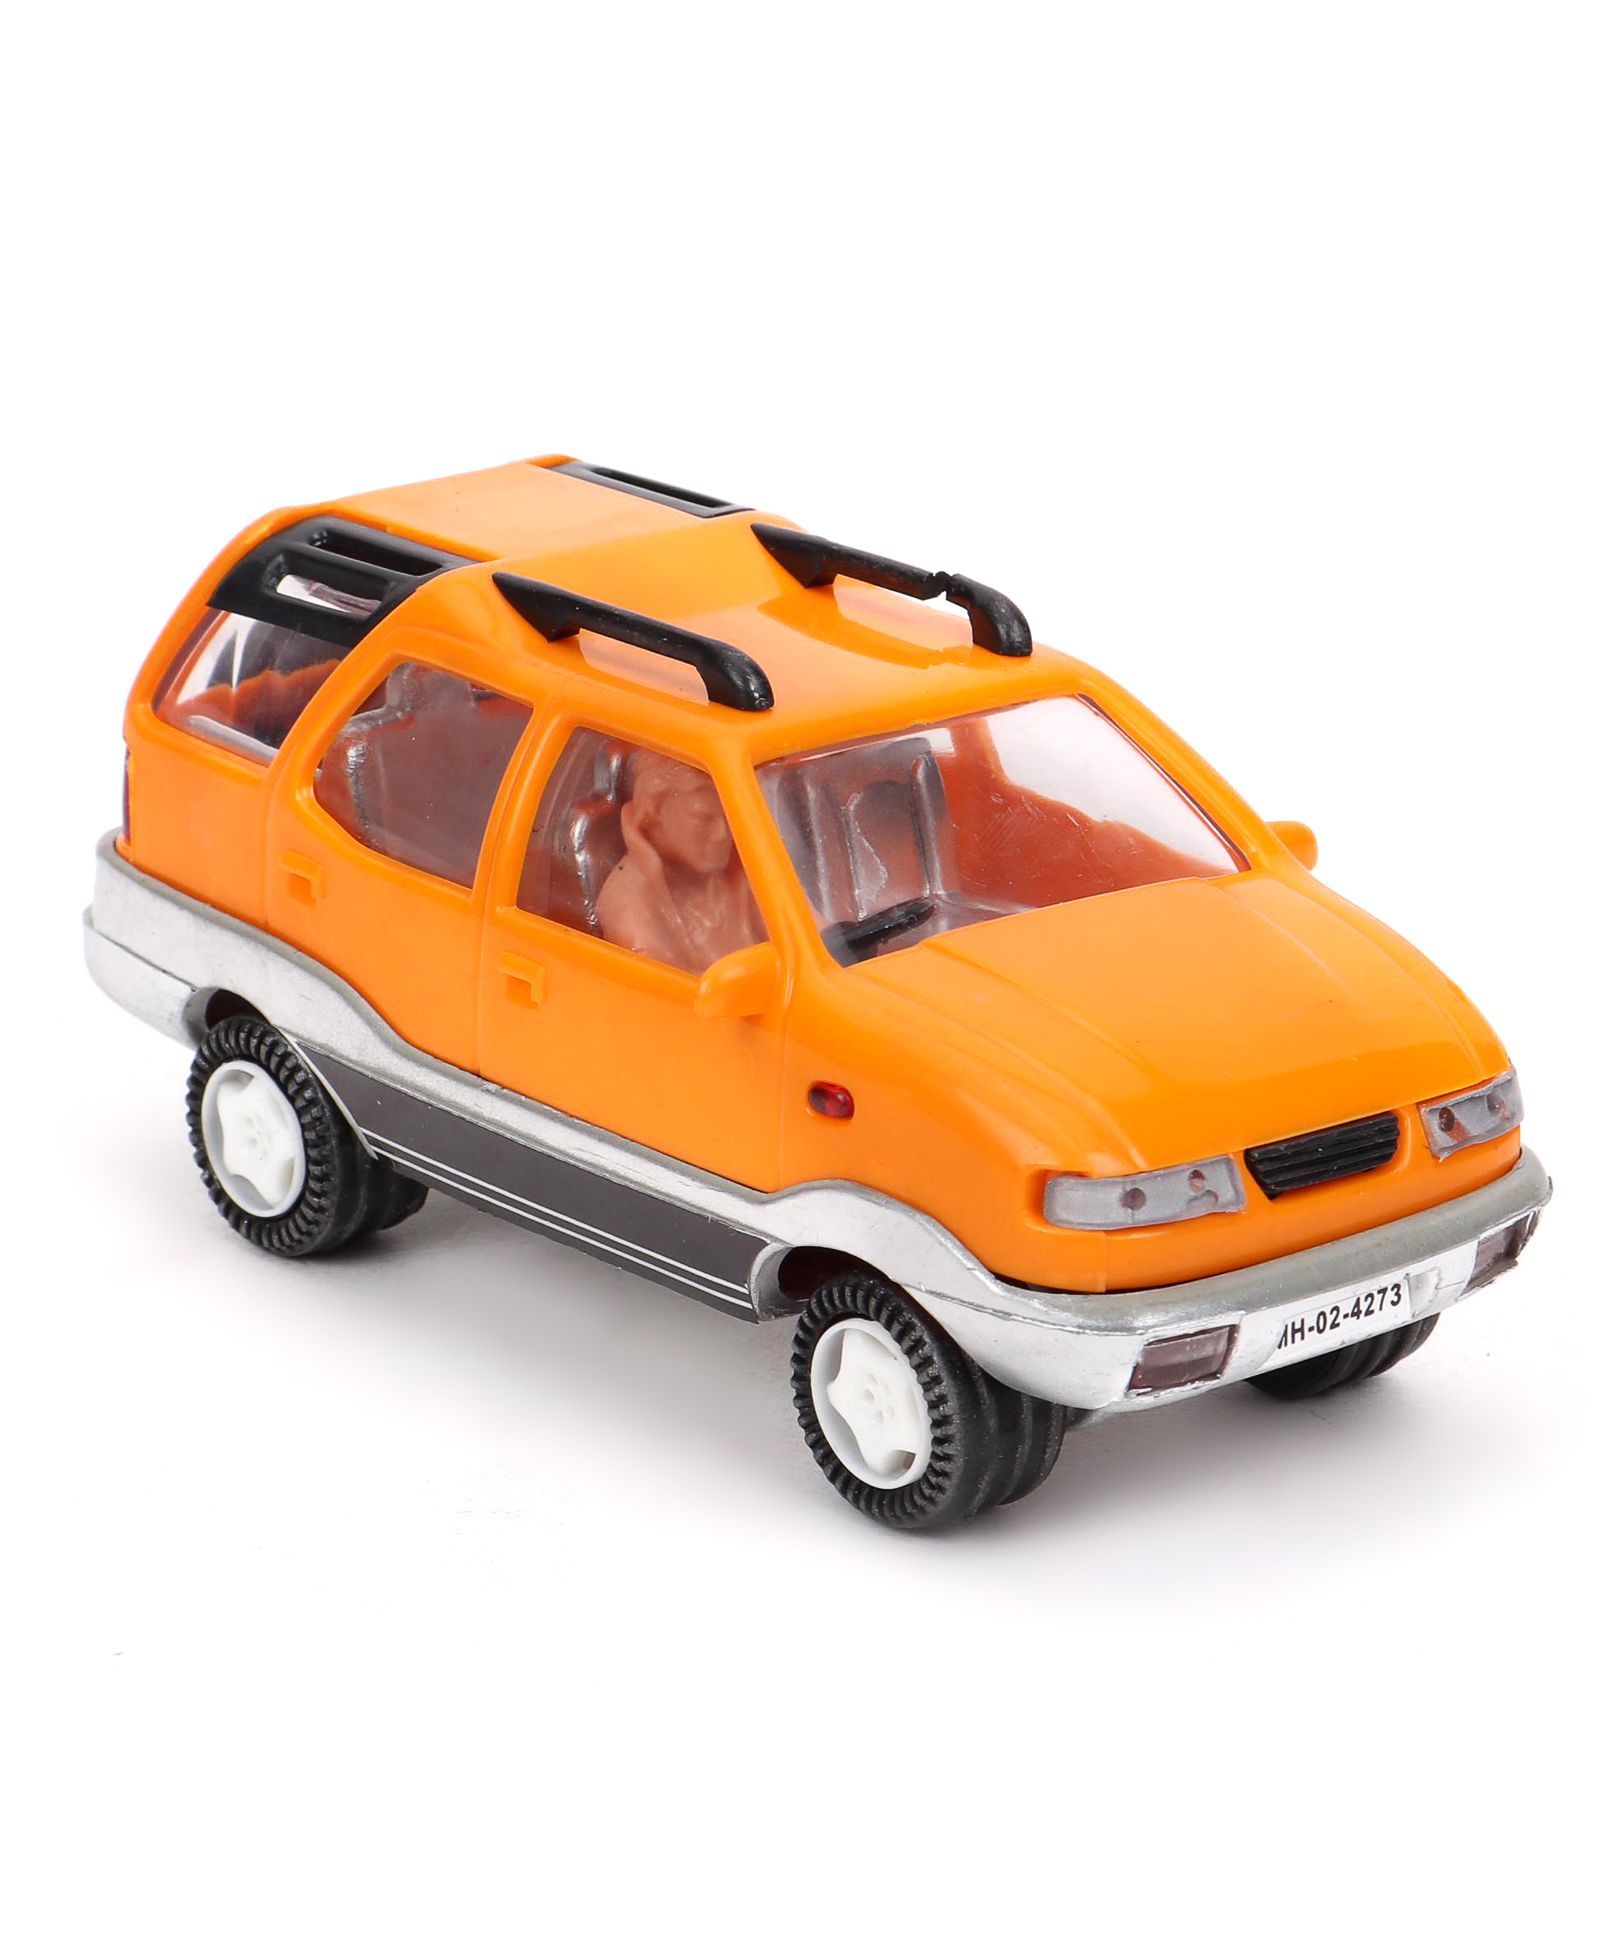 tata safari toy car